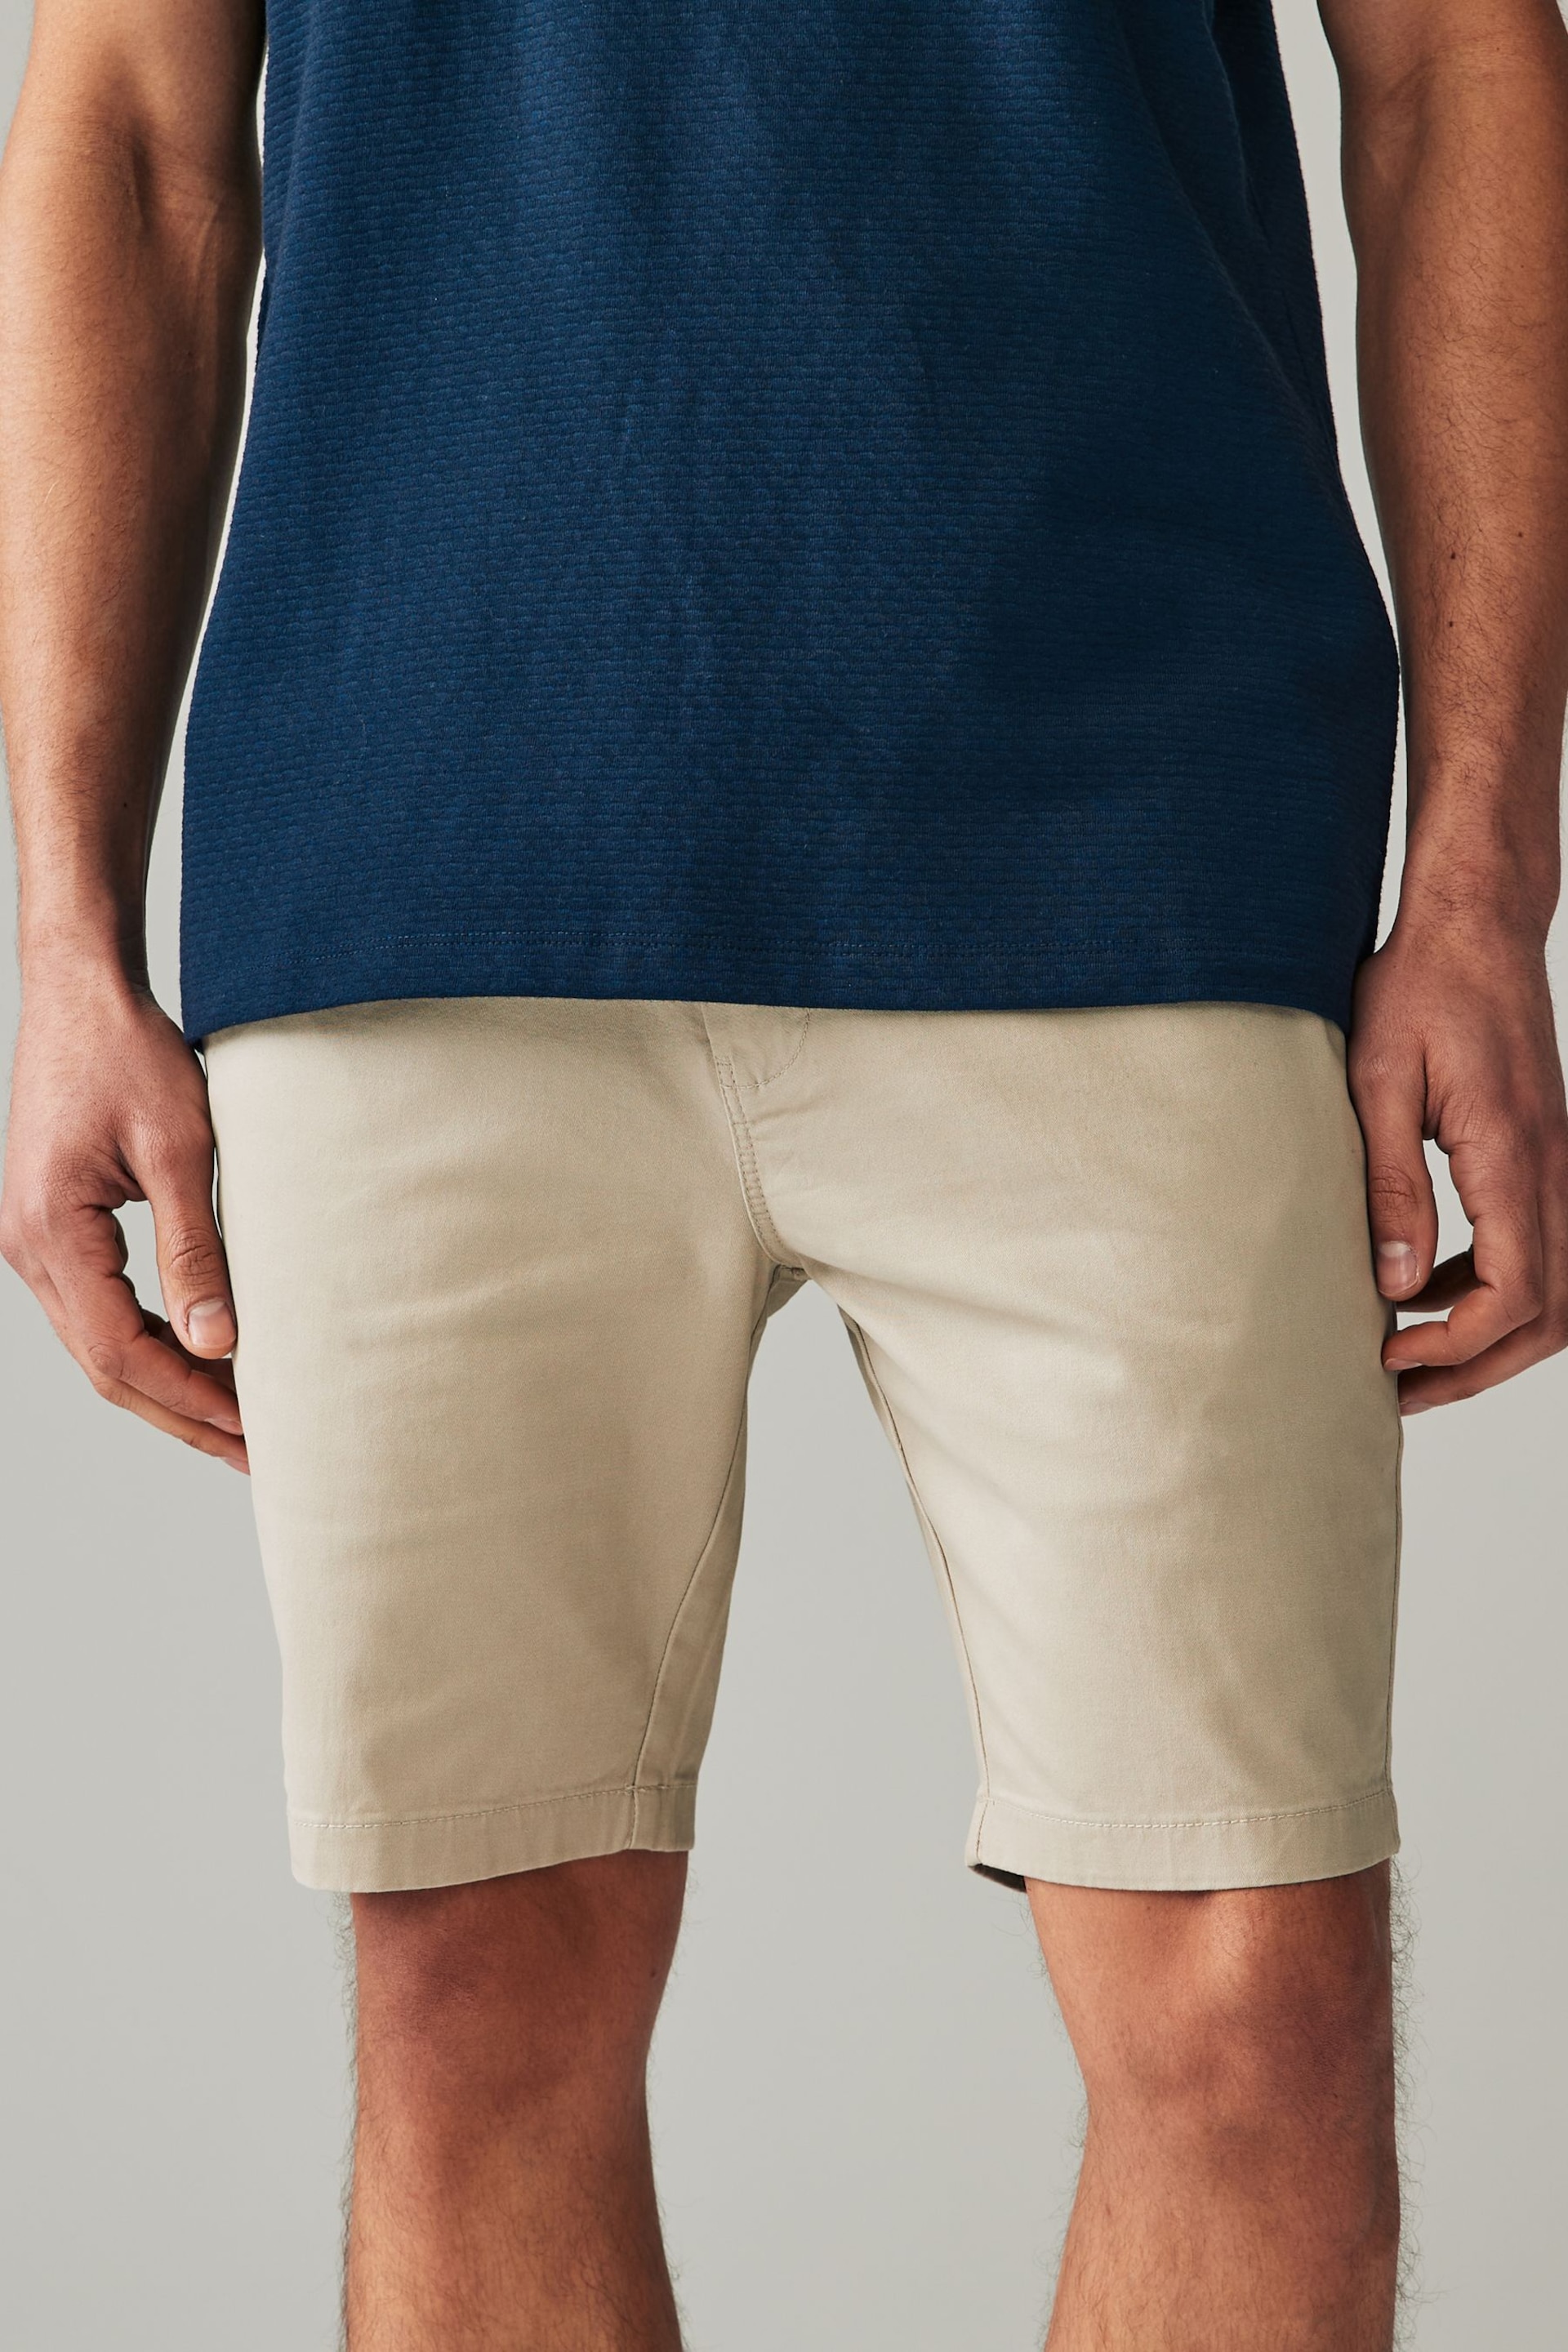 Navy Blue/Grey/Stone Skinny Stretch Chinos Shorts 3 Pack - Image 5 of 15